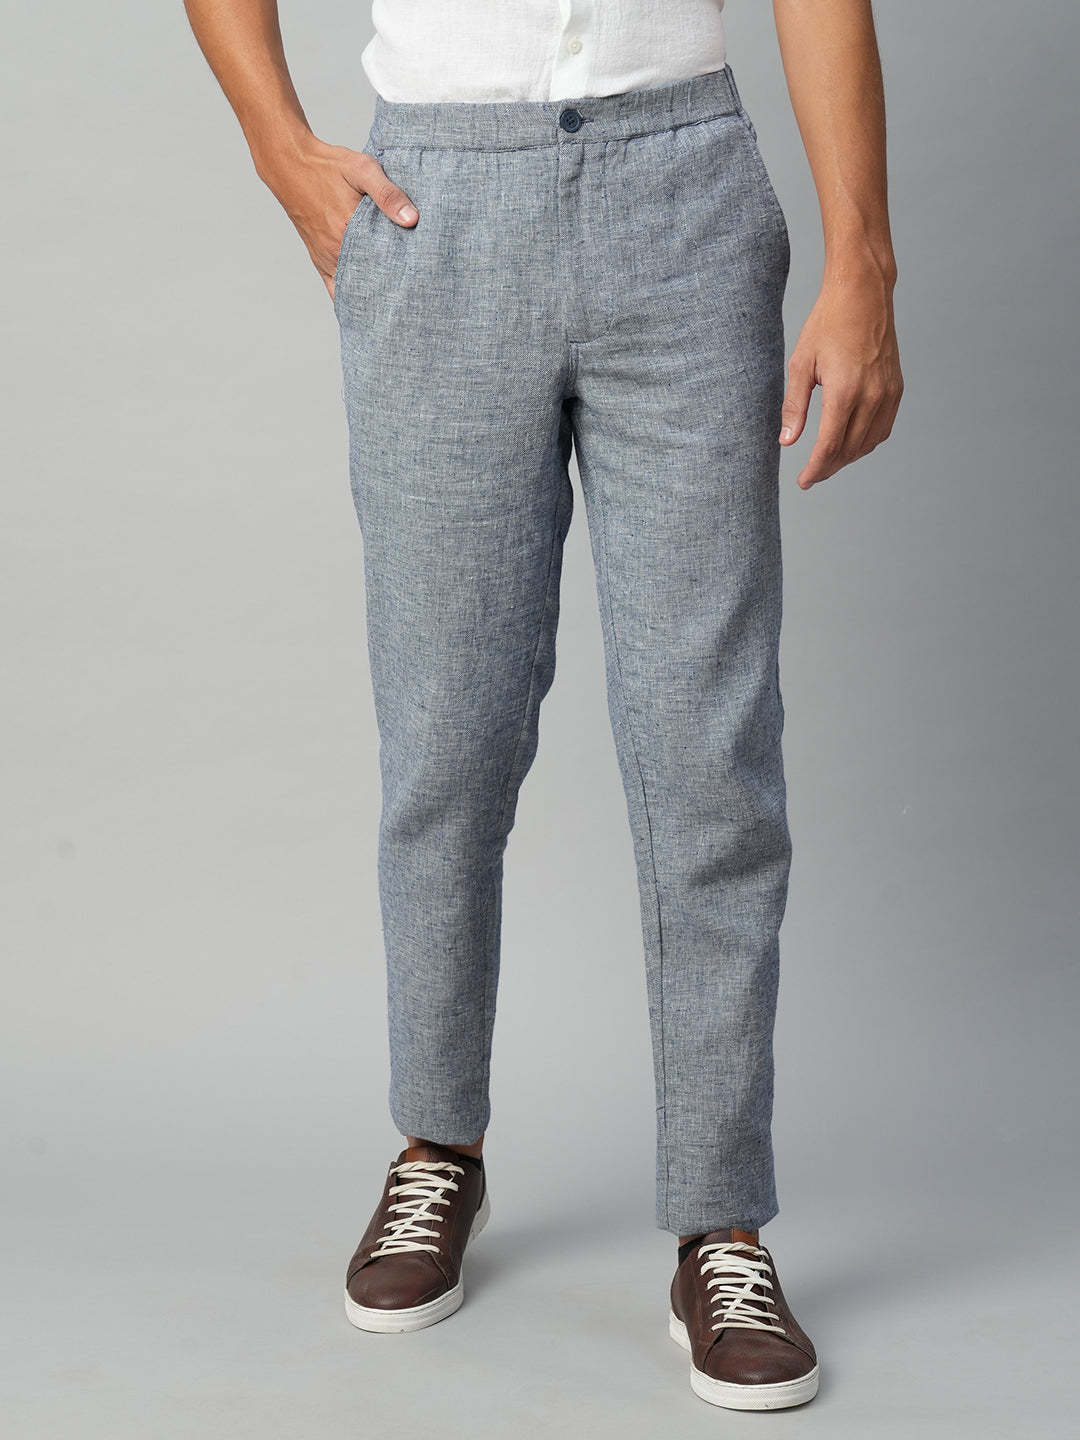 Men's Navy Cotton Linen Regular Fit Pant